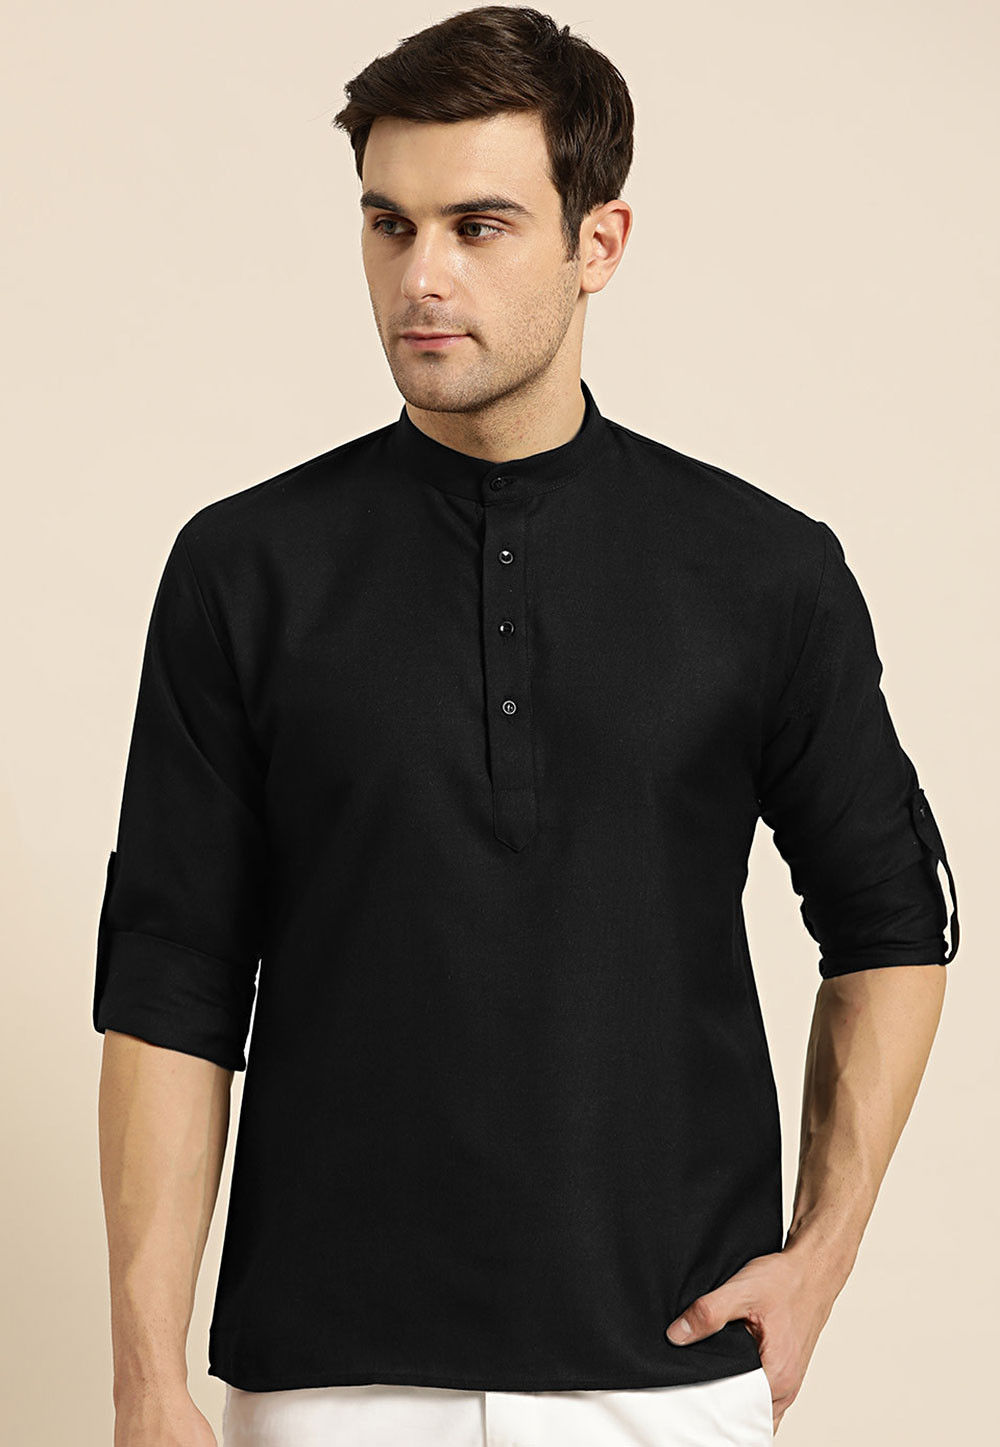 Solid Color Short Kurta Shirt Men's Cotton Designer Indian Fashion Apparel 